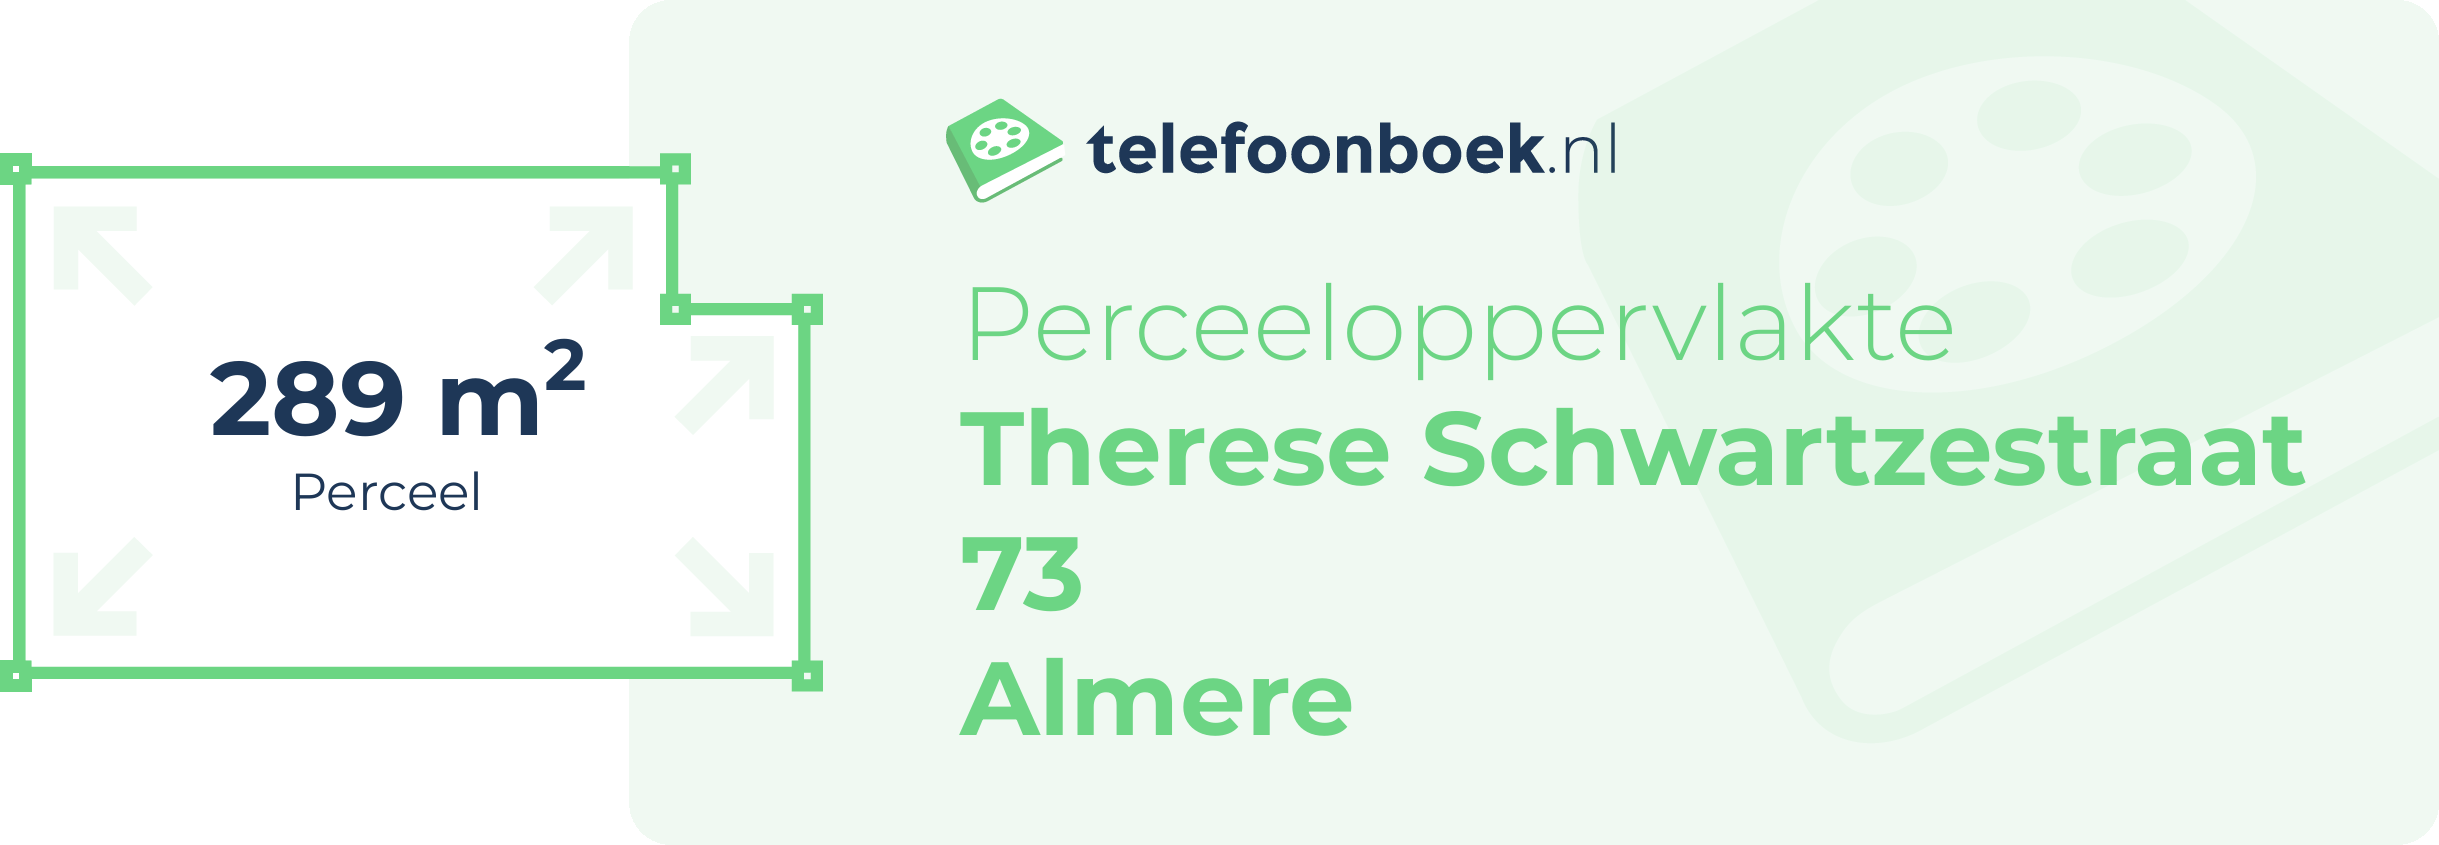 Perceeloppervlakte Therese Schwartzestraat 73 Almere